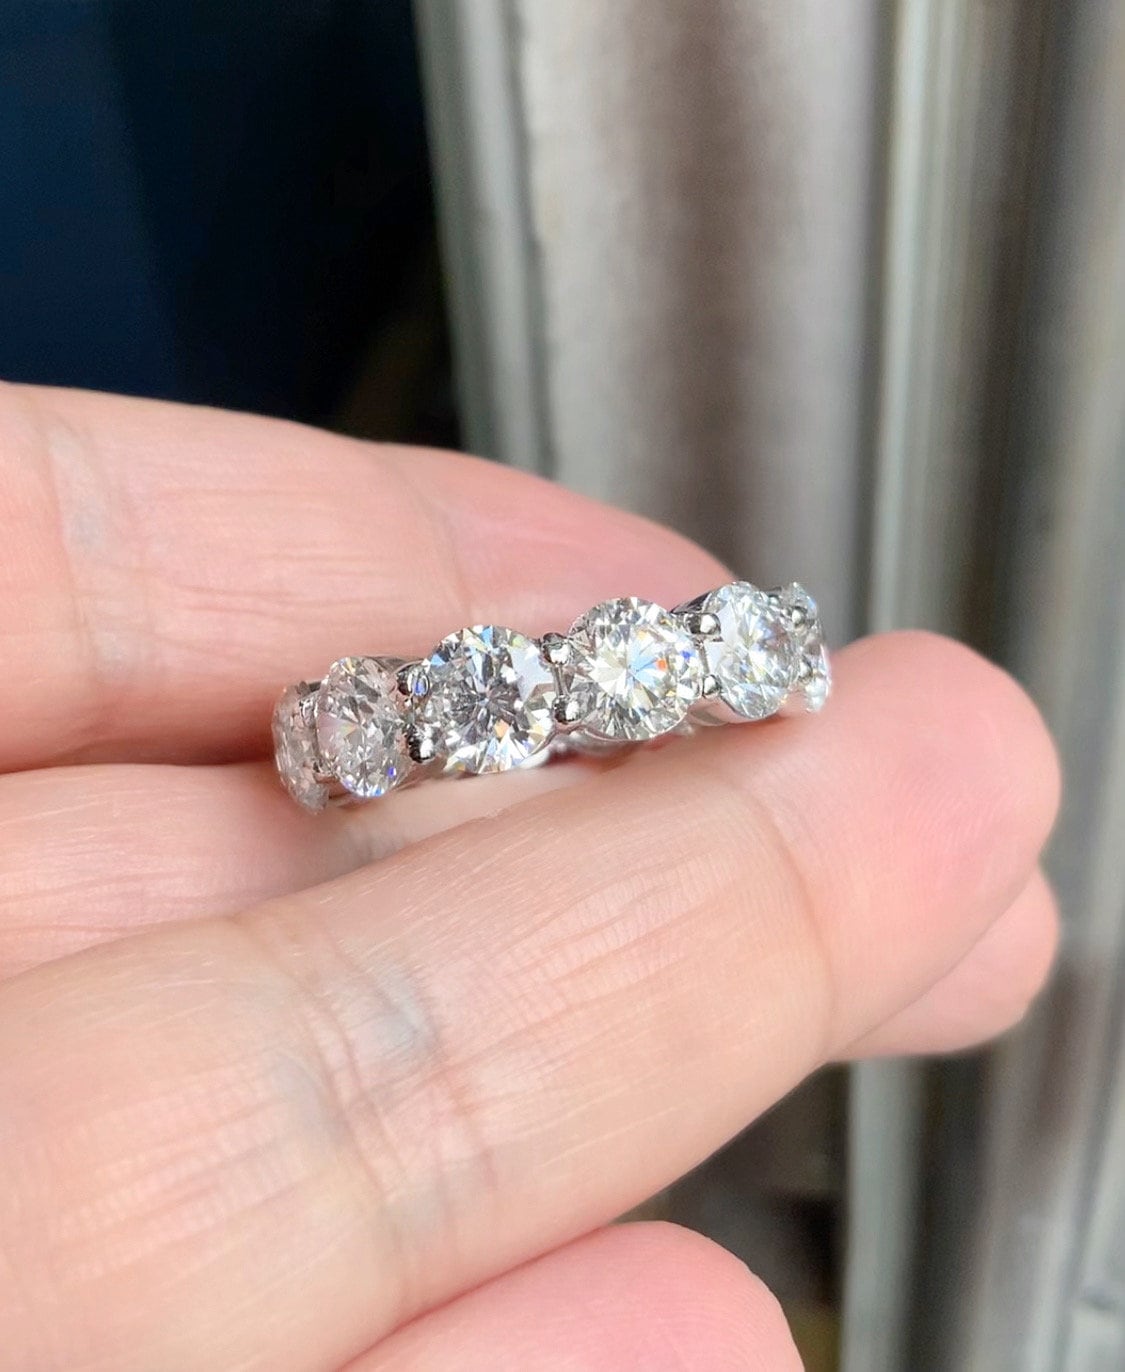 Amazon.com: CTDFJRYFF Full Diamond Giant 6 Carat Square Diamond Ring CZ  Promise Engagement Wedding Ring for Women (US Code 6-10) (6) : Clothing,  Shoes & Jewelry